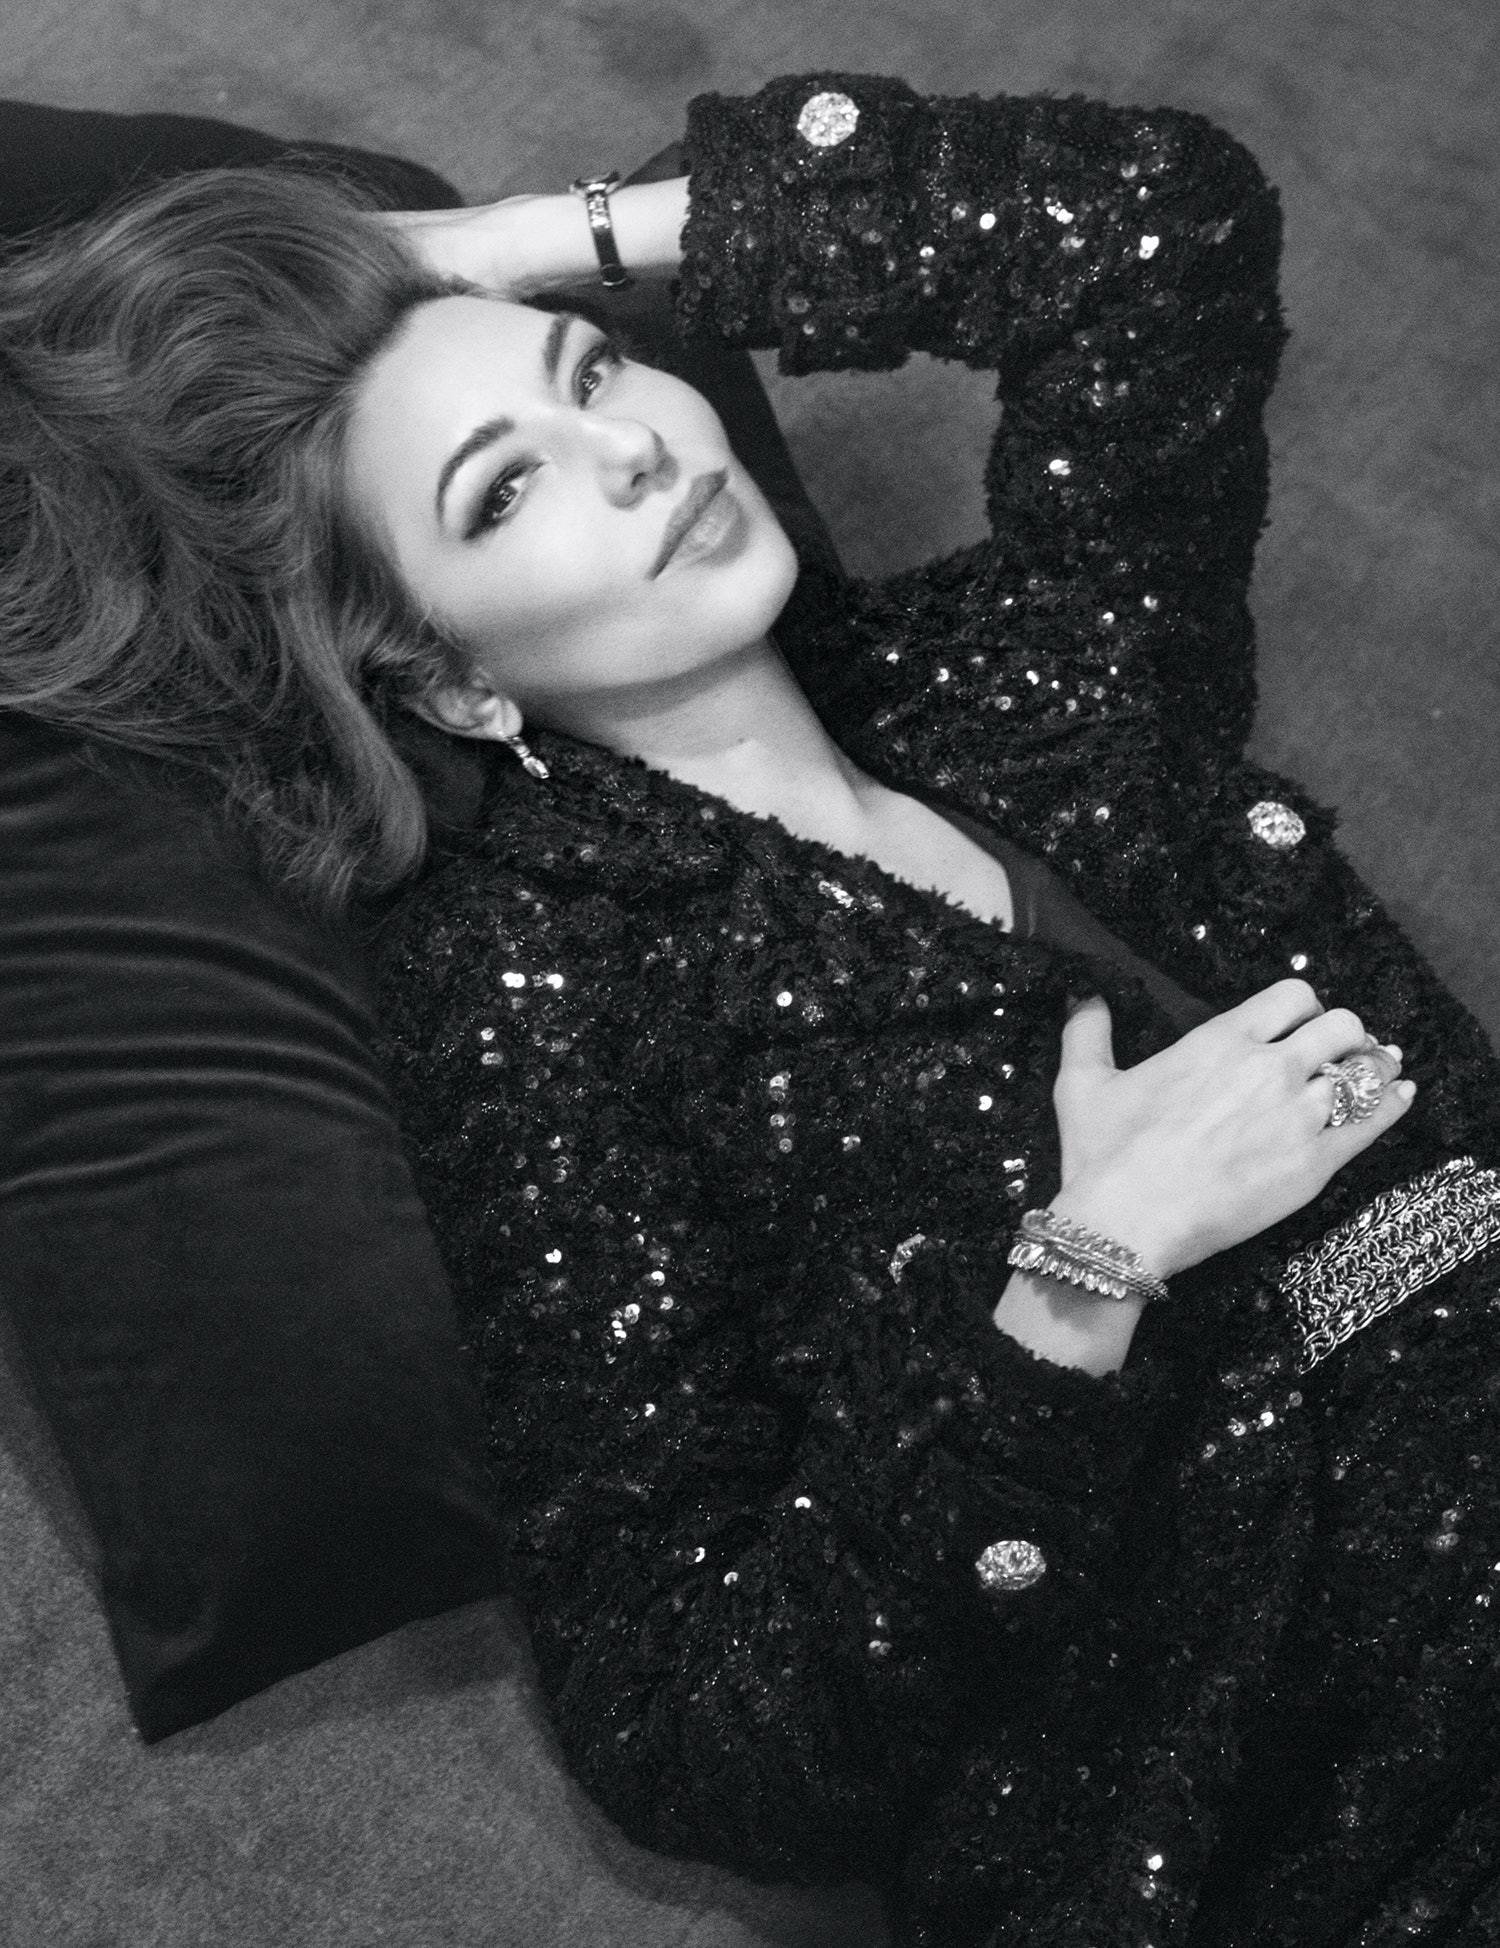 Sofia Coppola for Vogue Italia by Steven Meisel